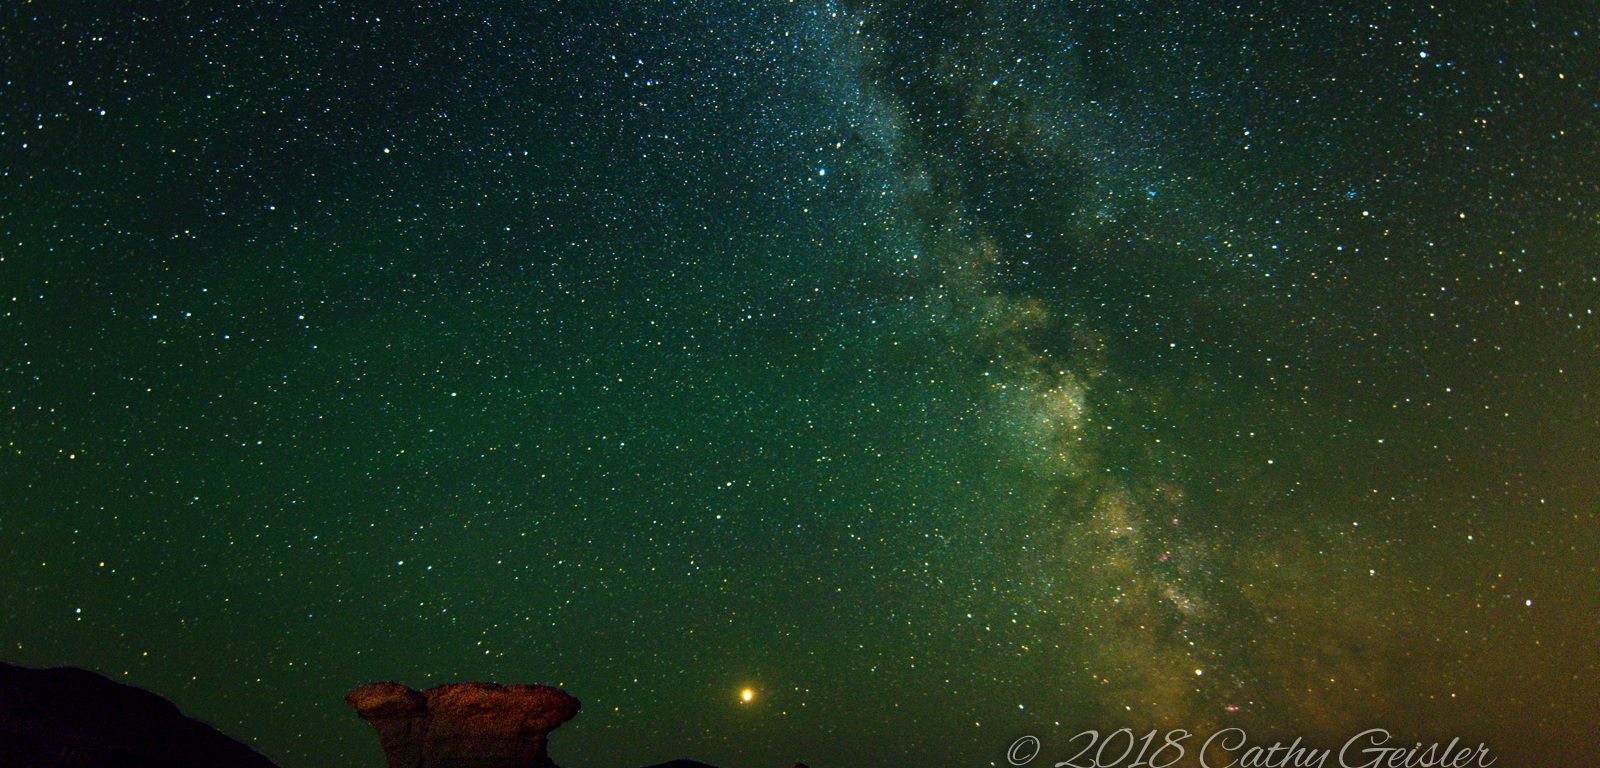 Avonlea Badlands - Hoodoo, Mars and Milky Way